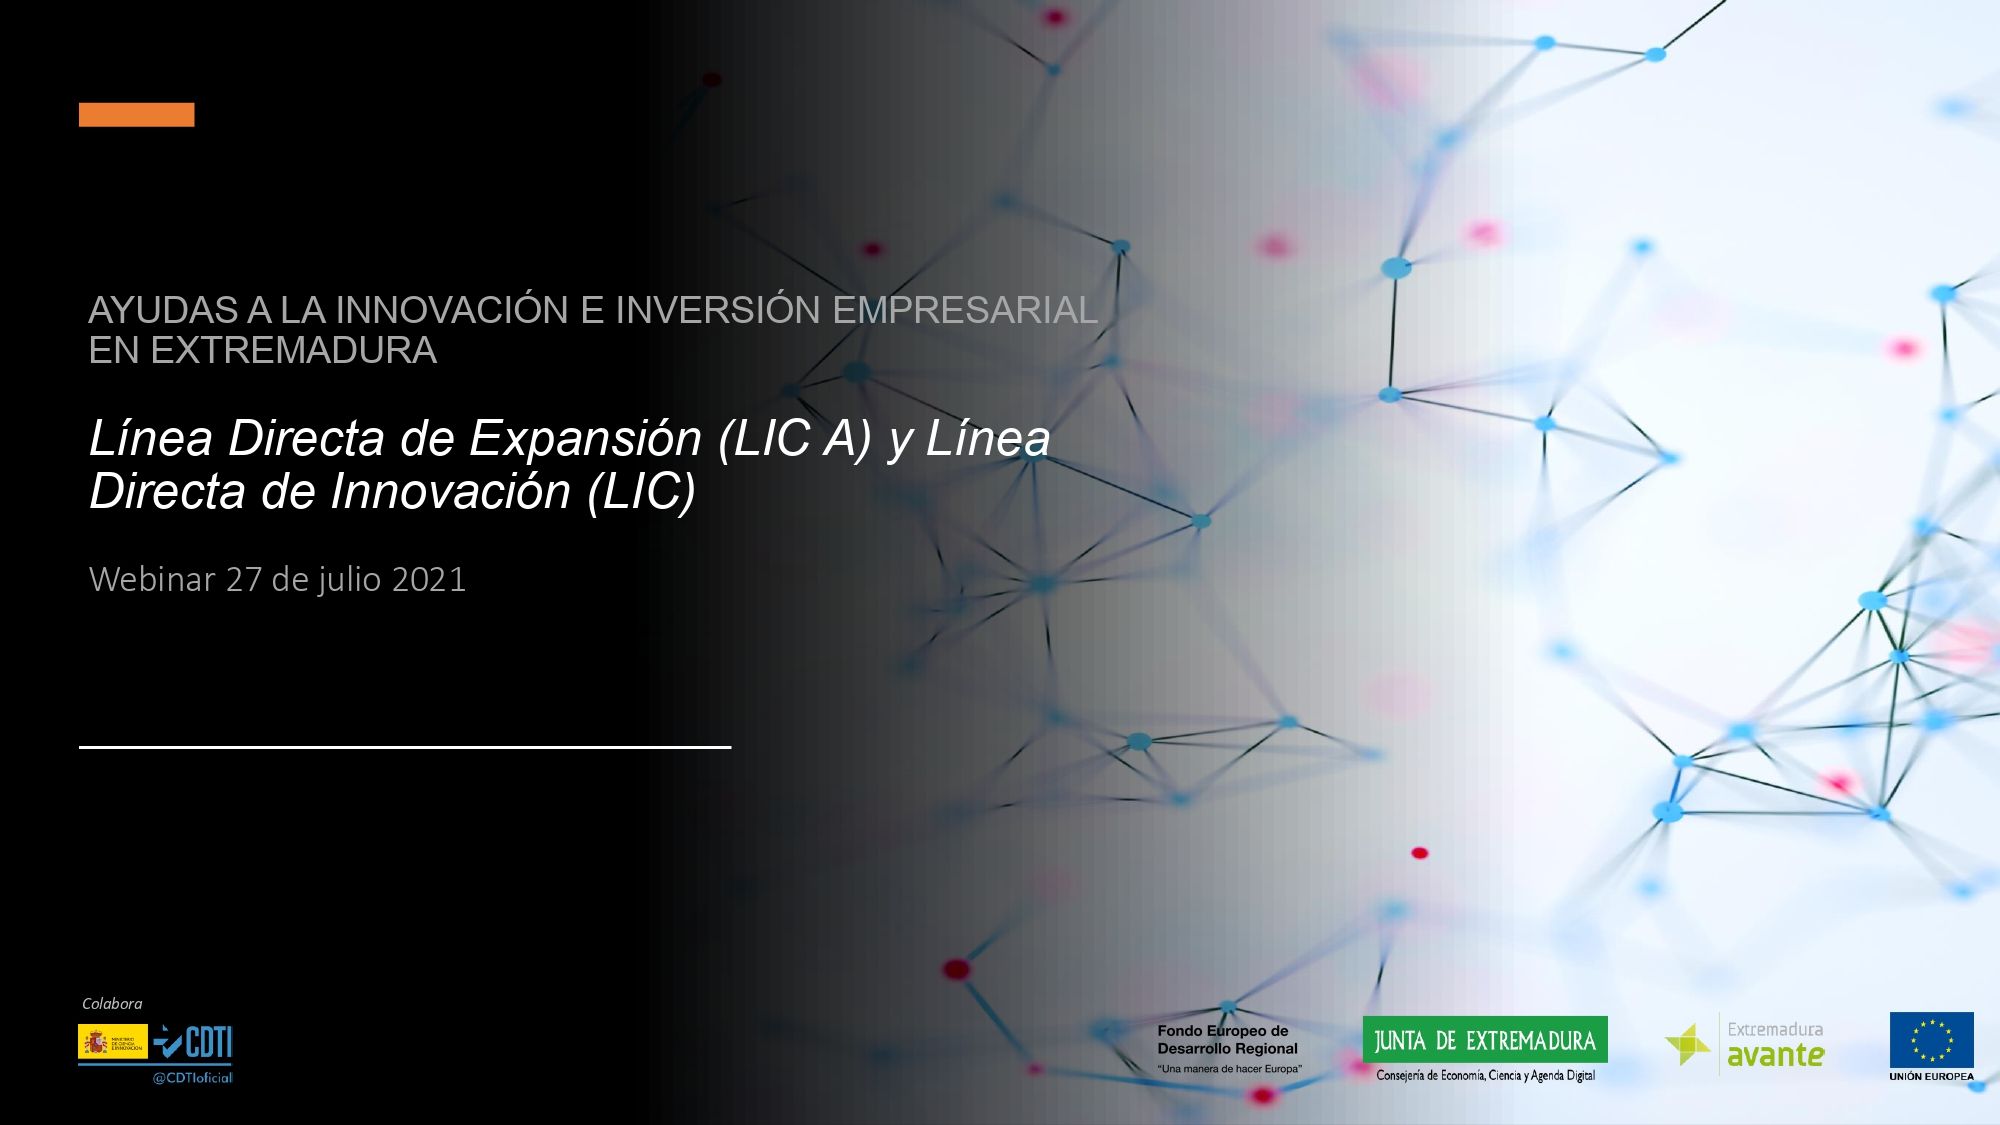 AYUDAS A LA INNOVACIÓN E INVERSIÓN EMPRESARIAL EN EXTREMADURA: Línea Directa de Expansión (LIC A) y Línea Directa de Innovación (LIC)